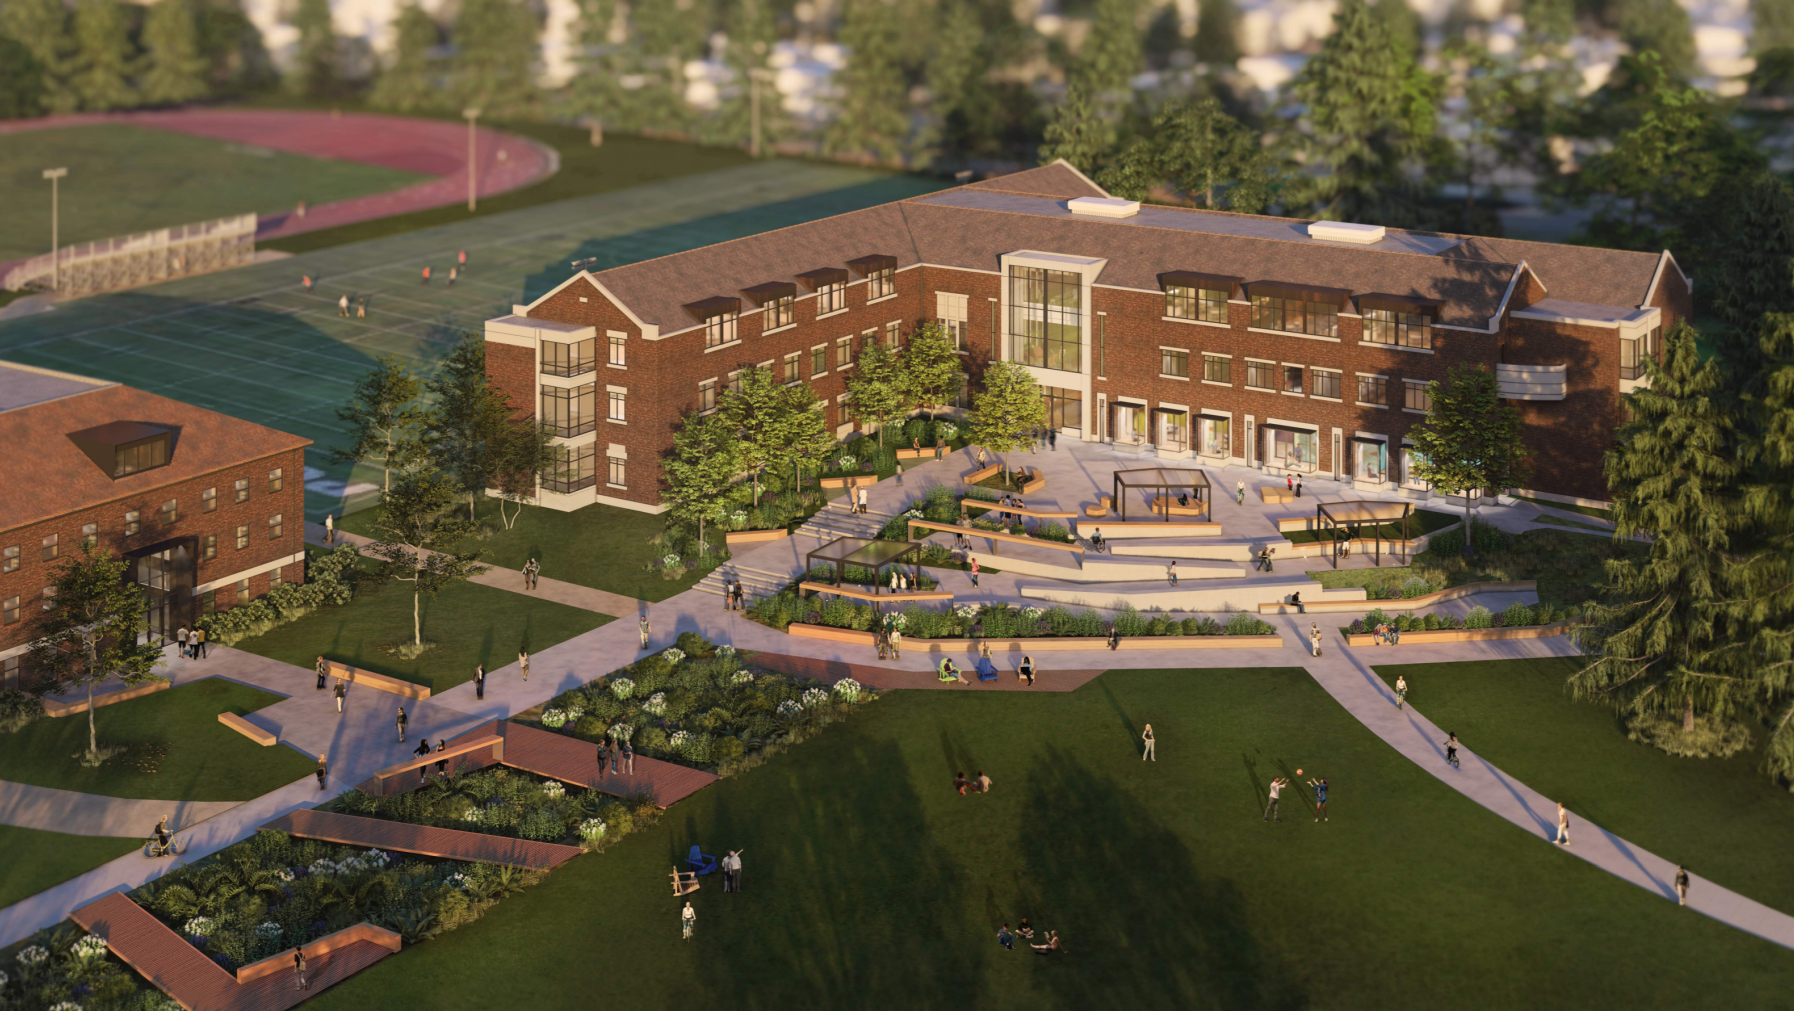 Rendering of Warner and Wyatt Halls from the 2023-43 Campus Development Plan